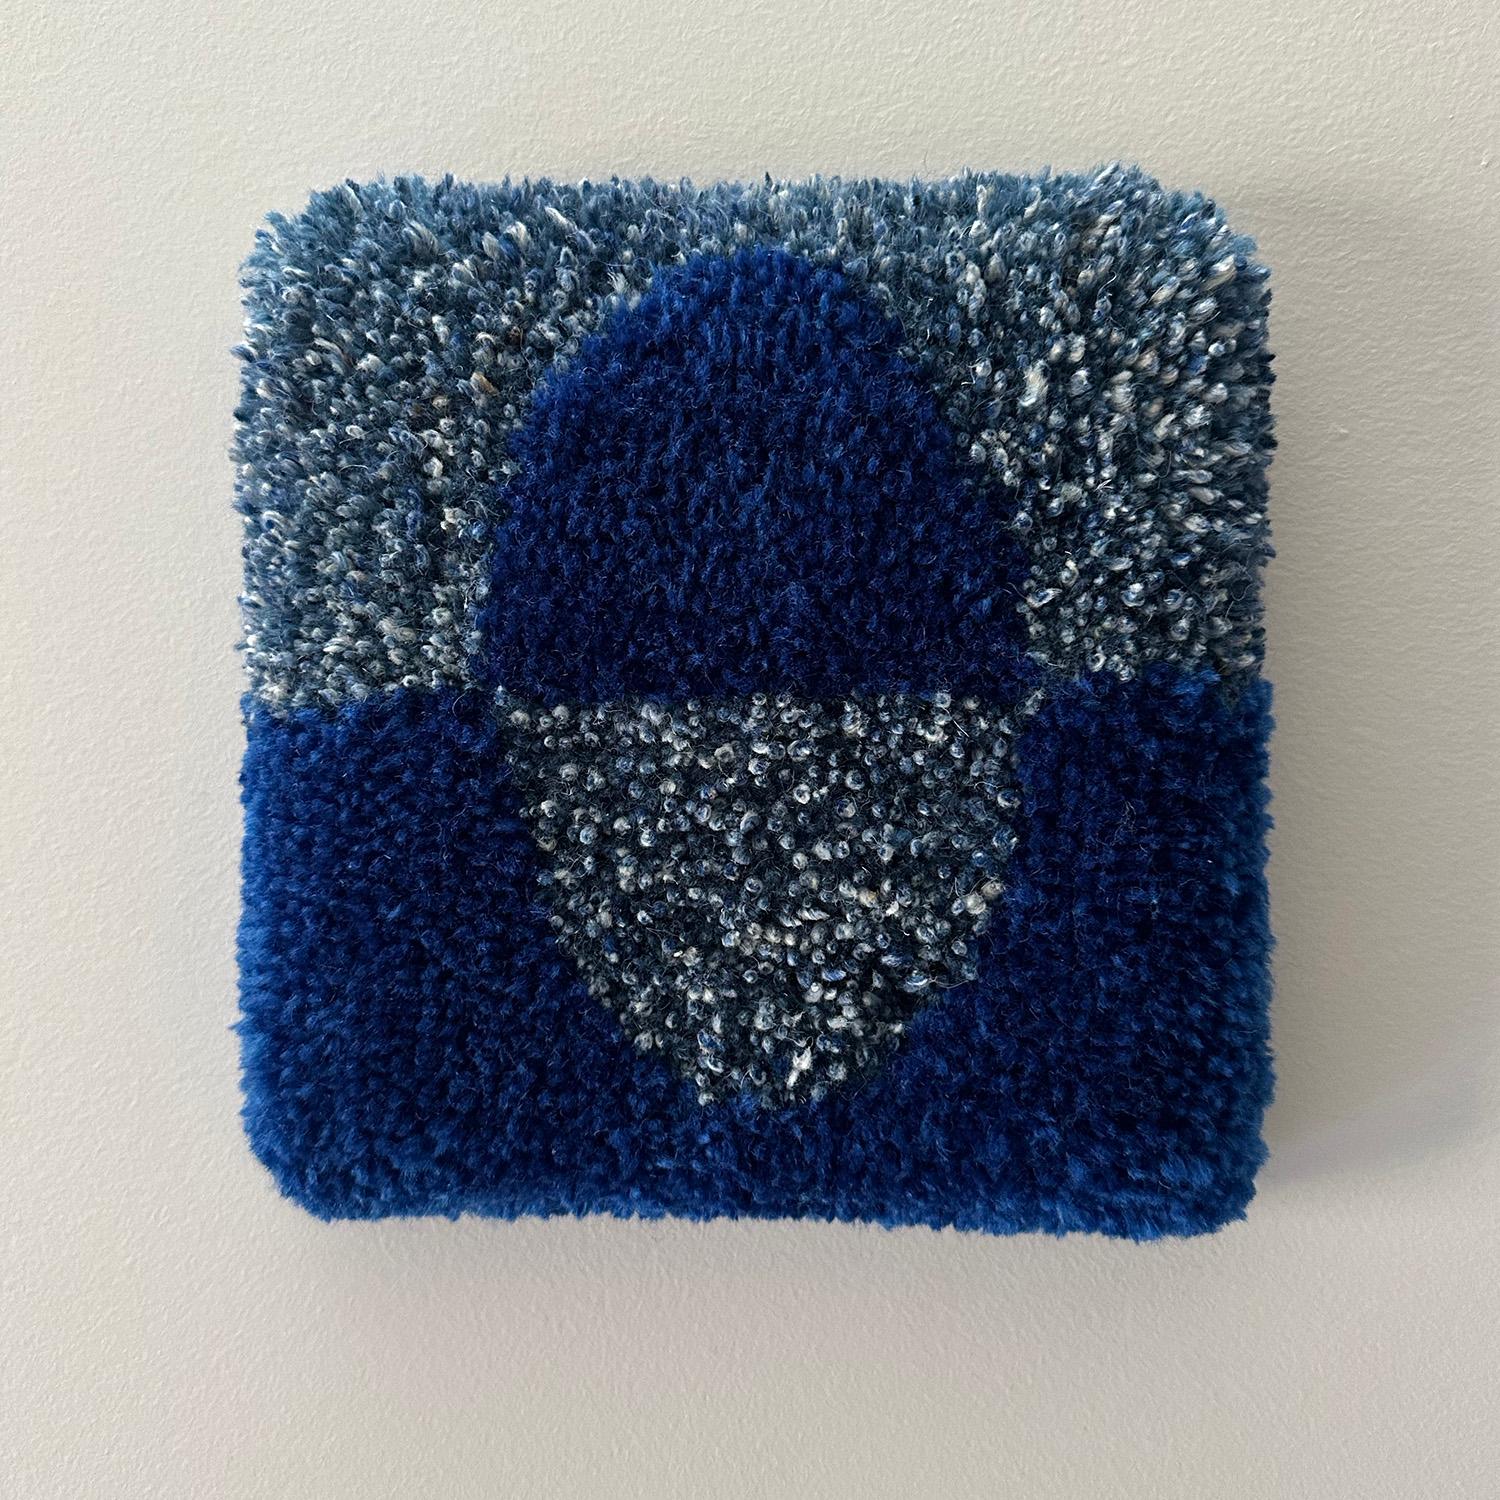 Fog, Textur, Textil, Muster, Blau, symmetrisch  – Sculpture von Ana Maria Farina